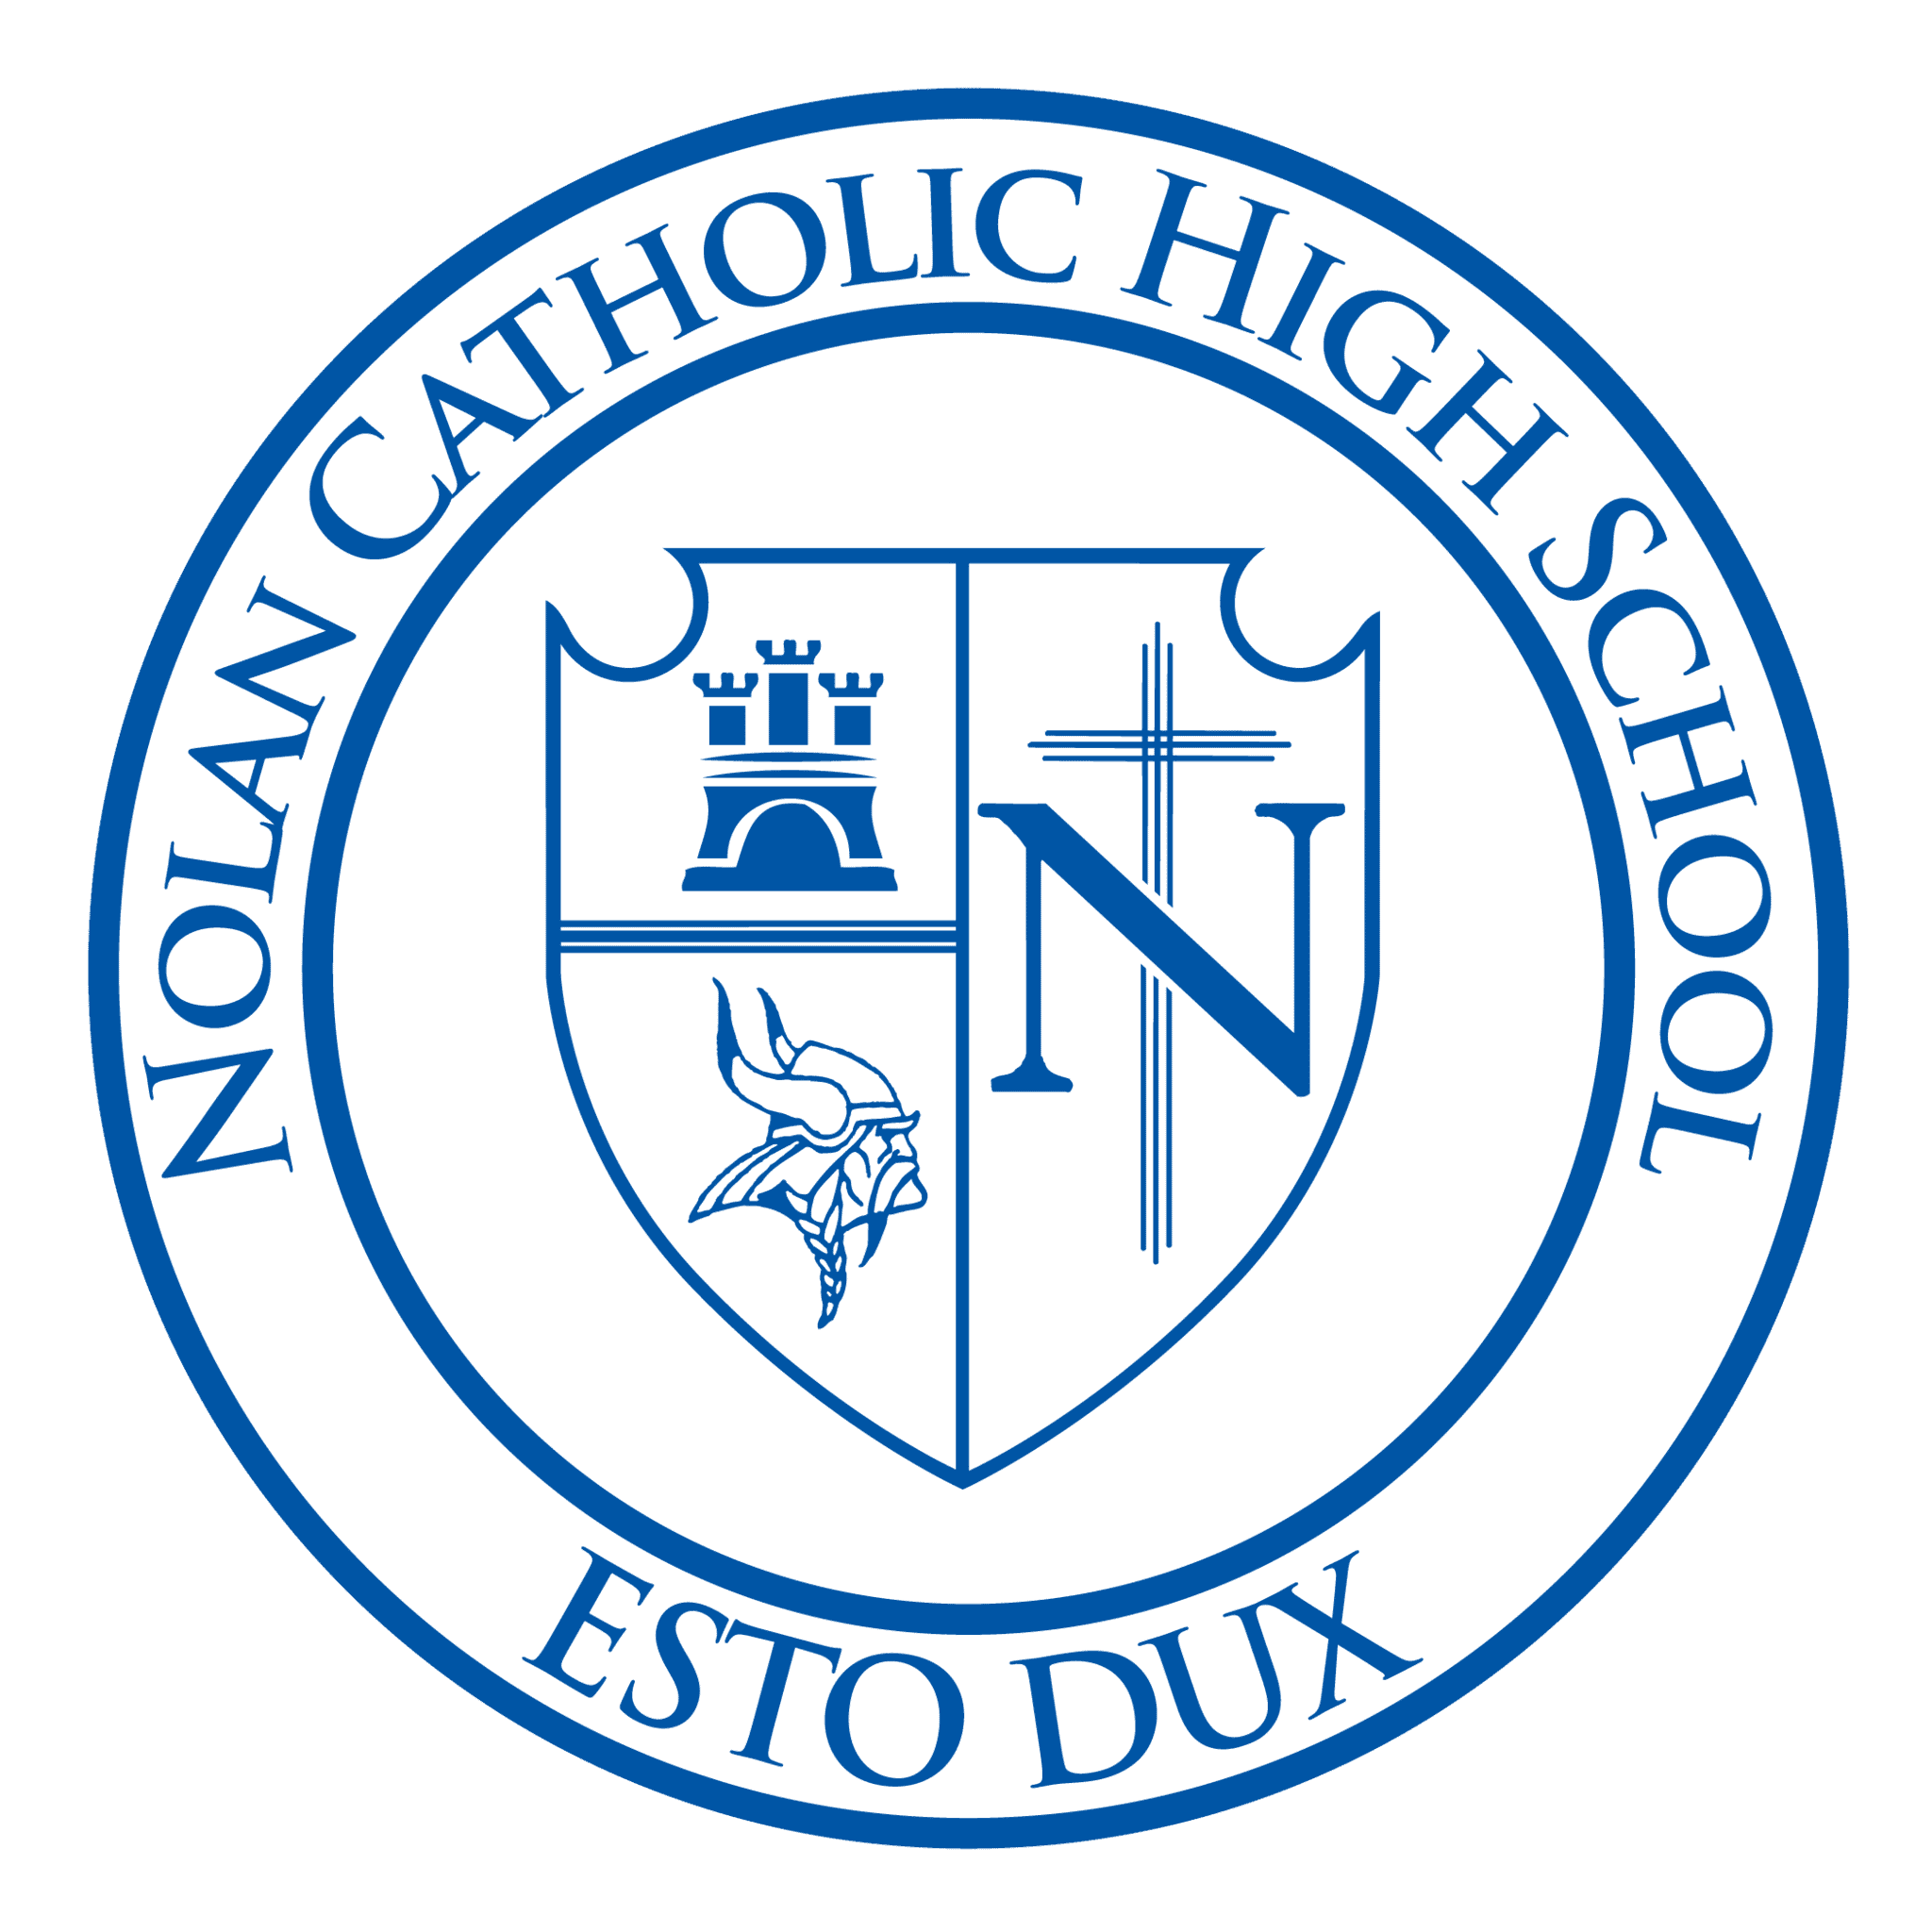 Nolan Catholic High School